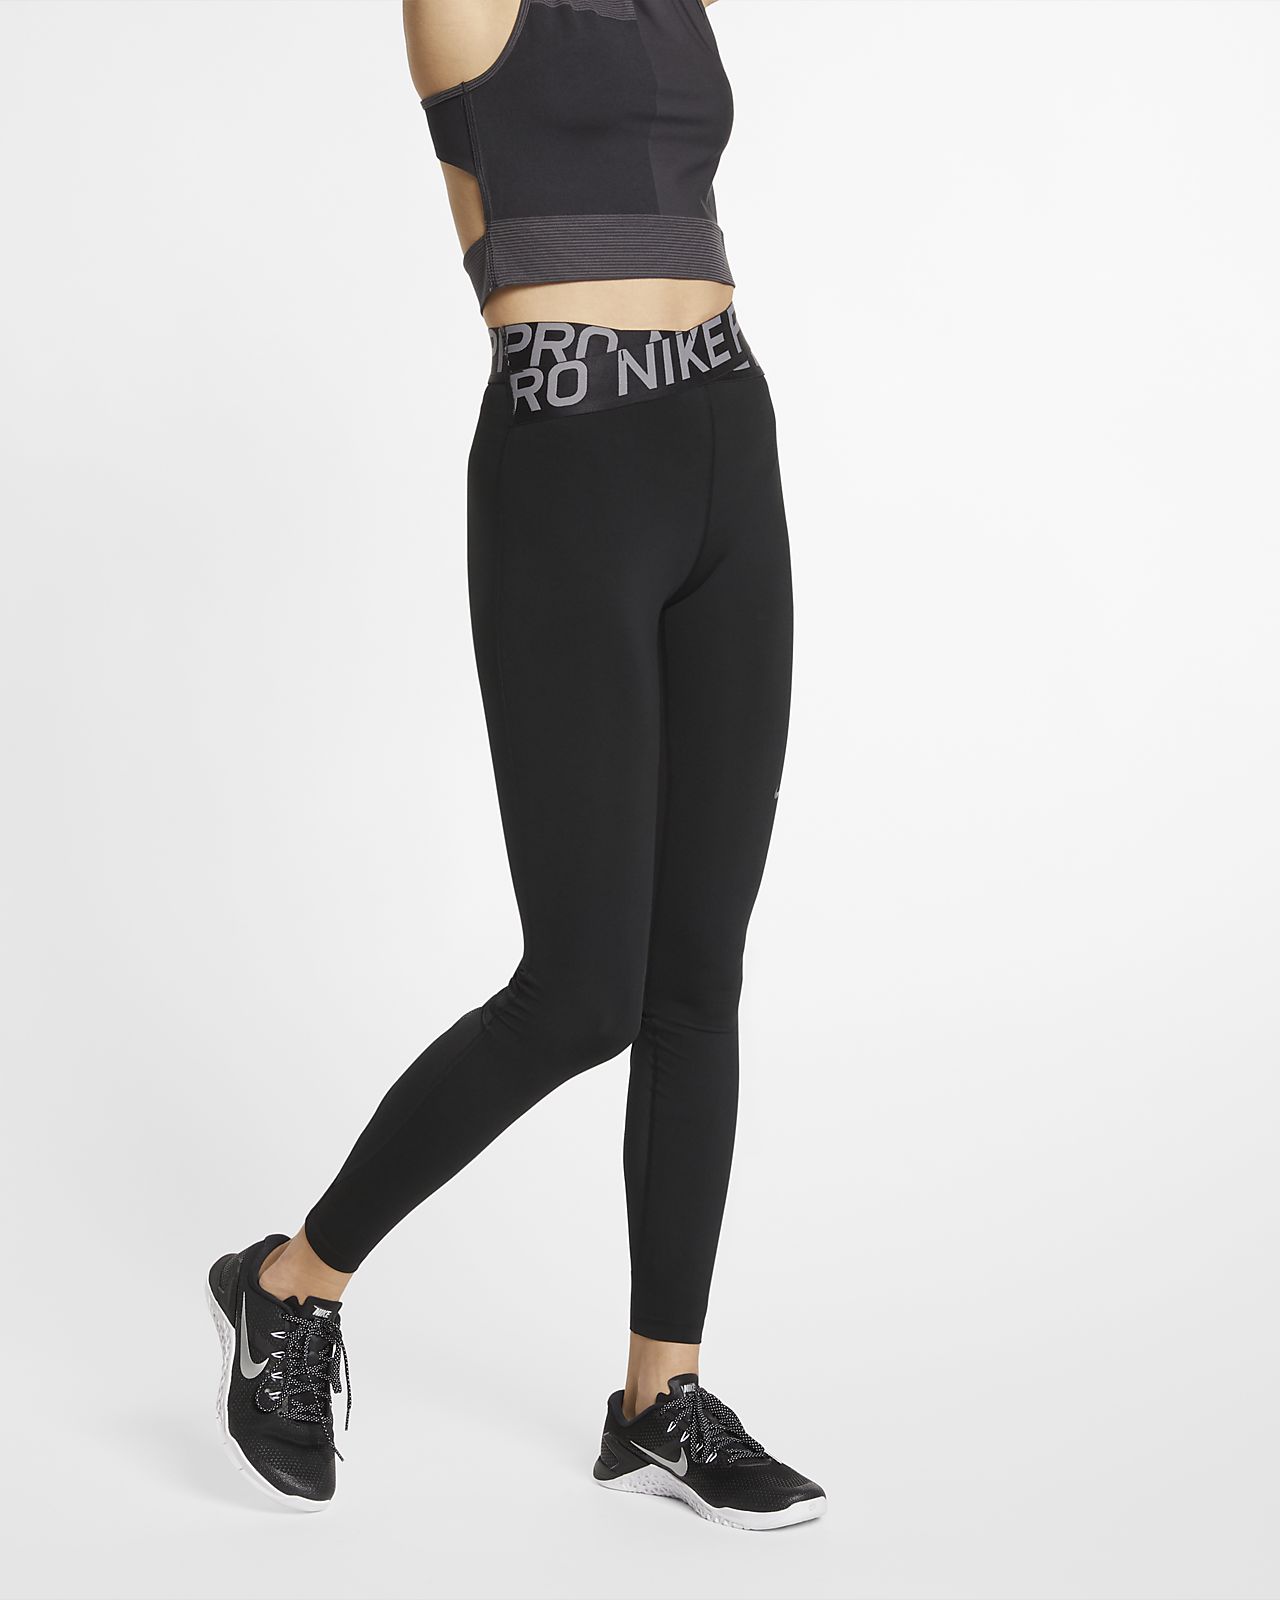 black nike leggings sale